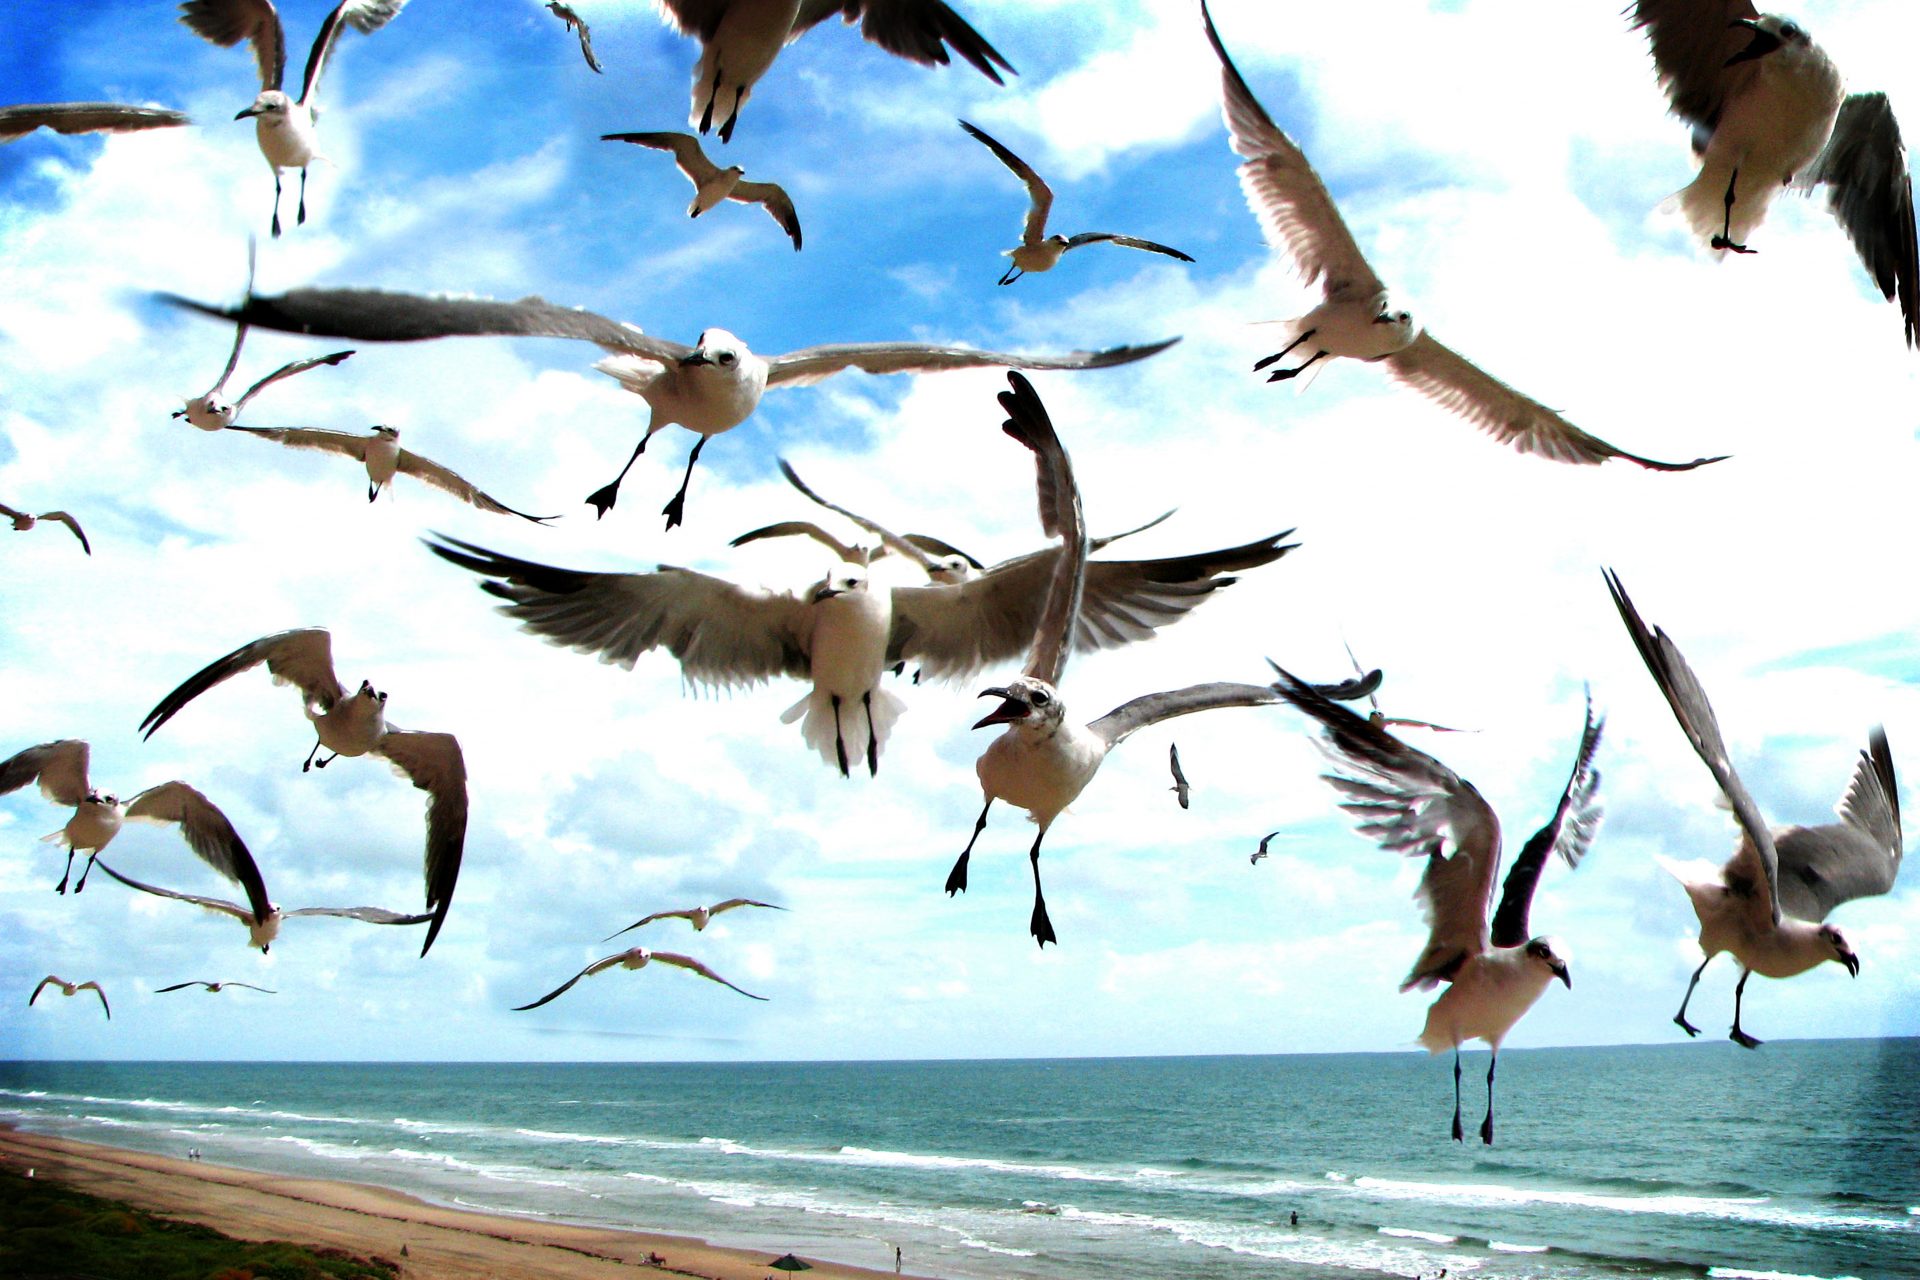 The seagulls